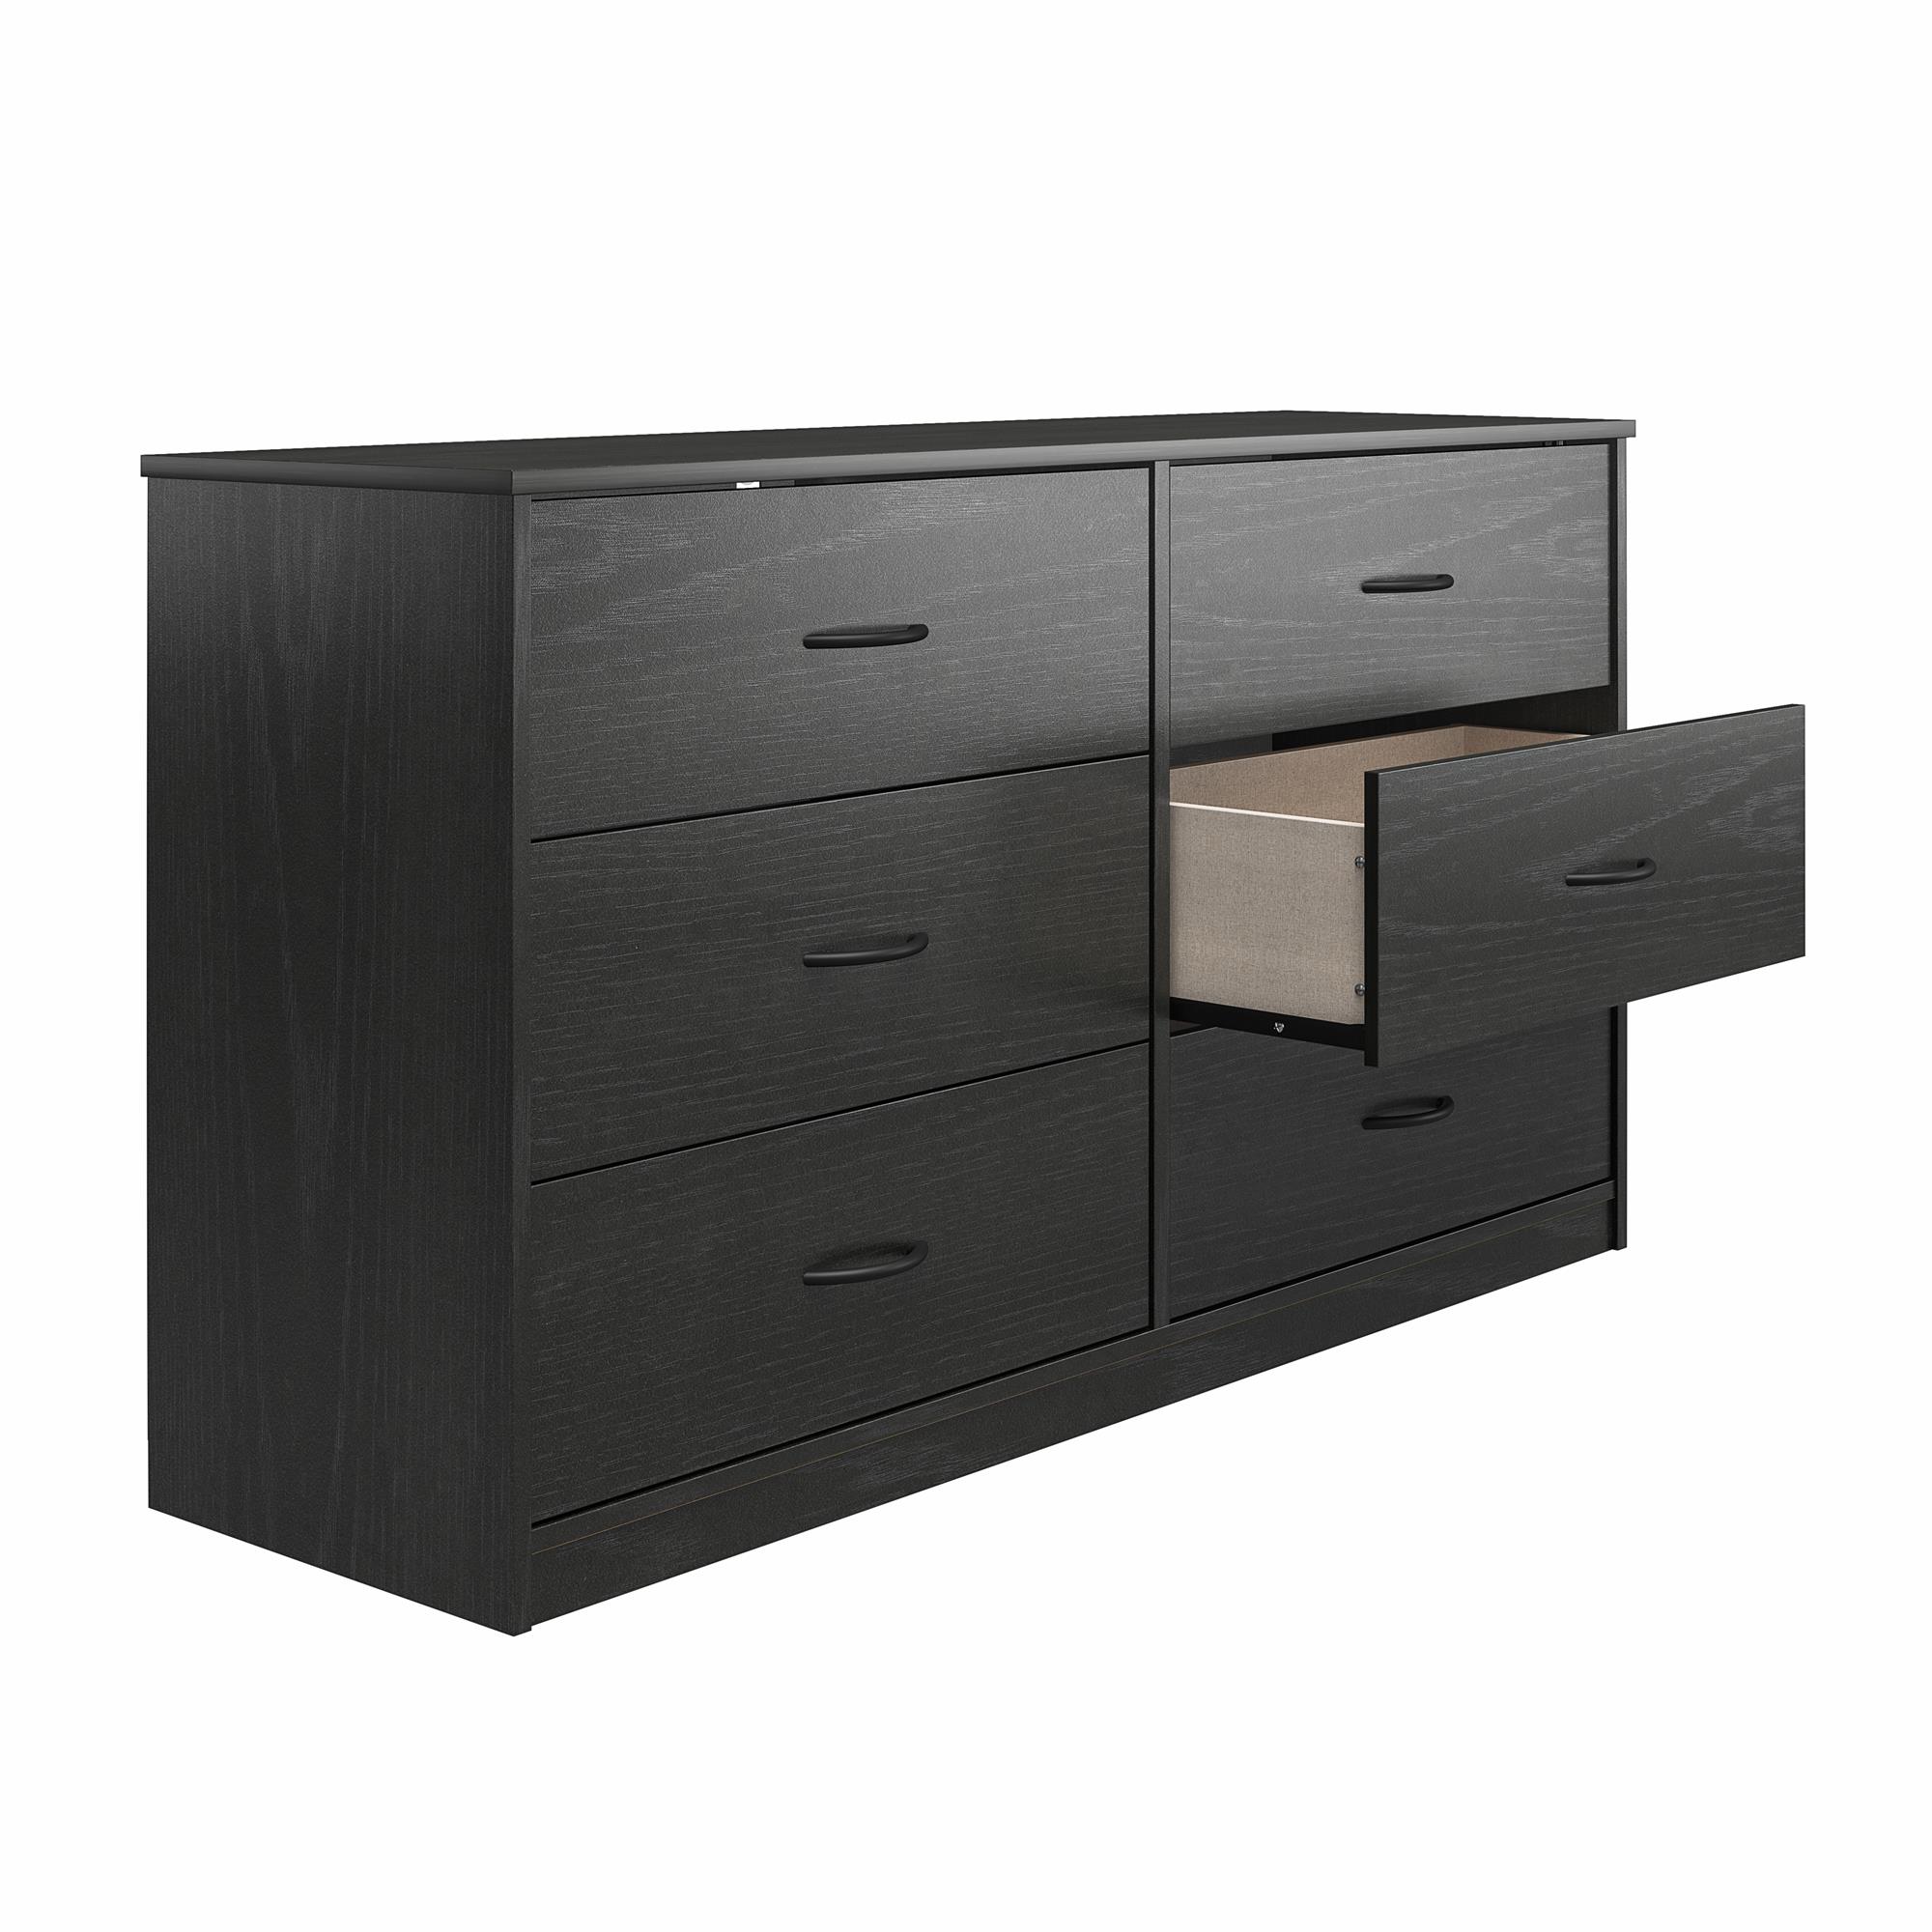 Mainstays Classic 6 Drawer Dresser, Black Oak - image 5 of 19